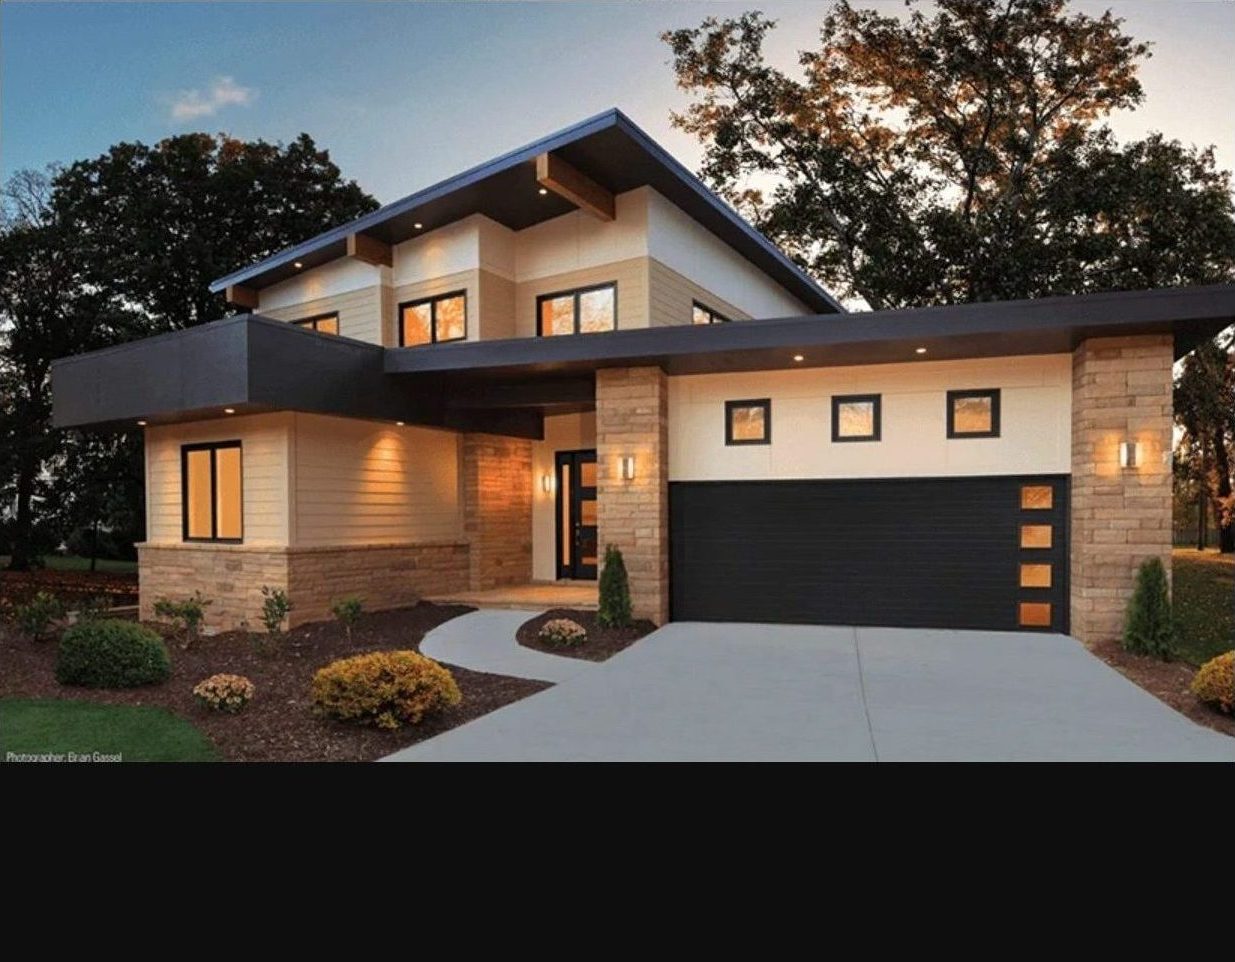 modern style house with half white half brown garage door that has four vertical windows and three horizontal windows